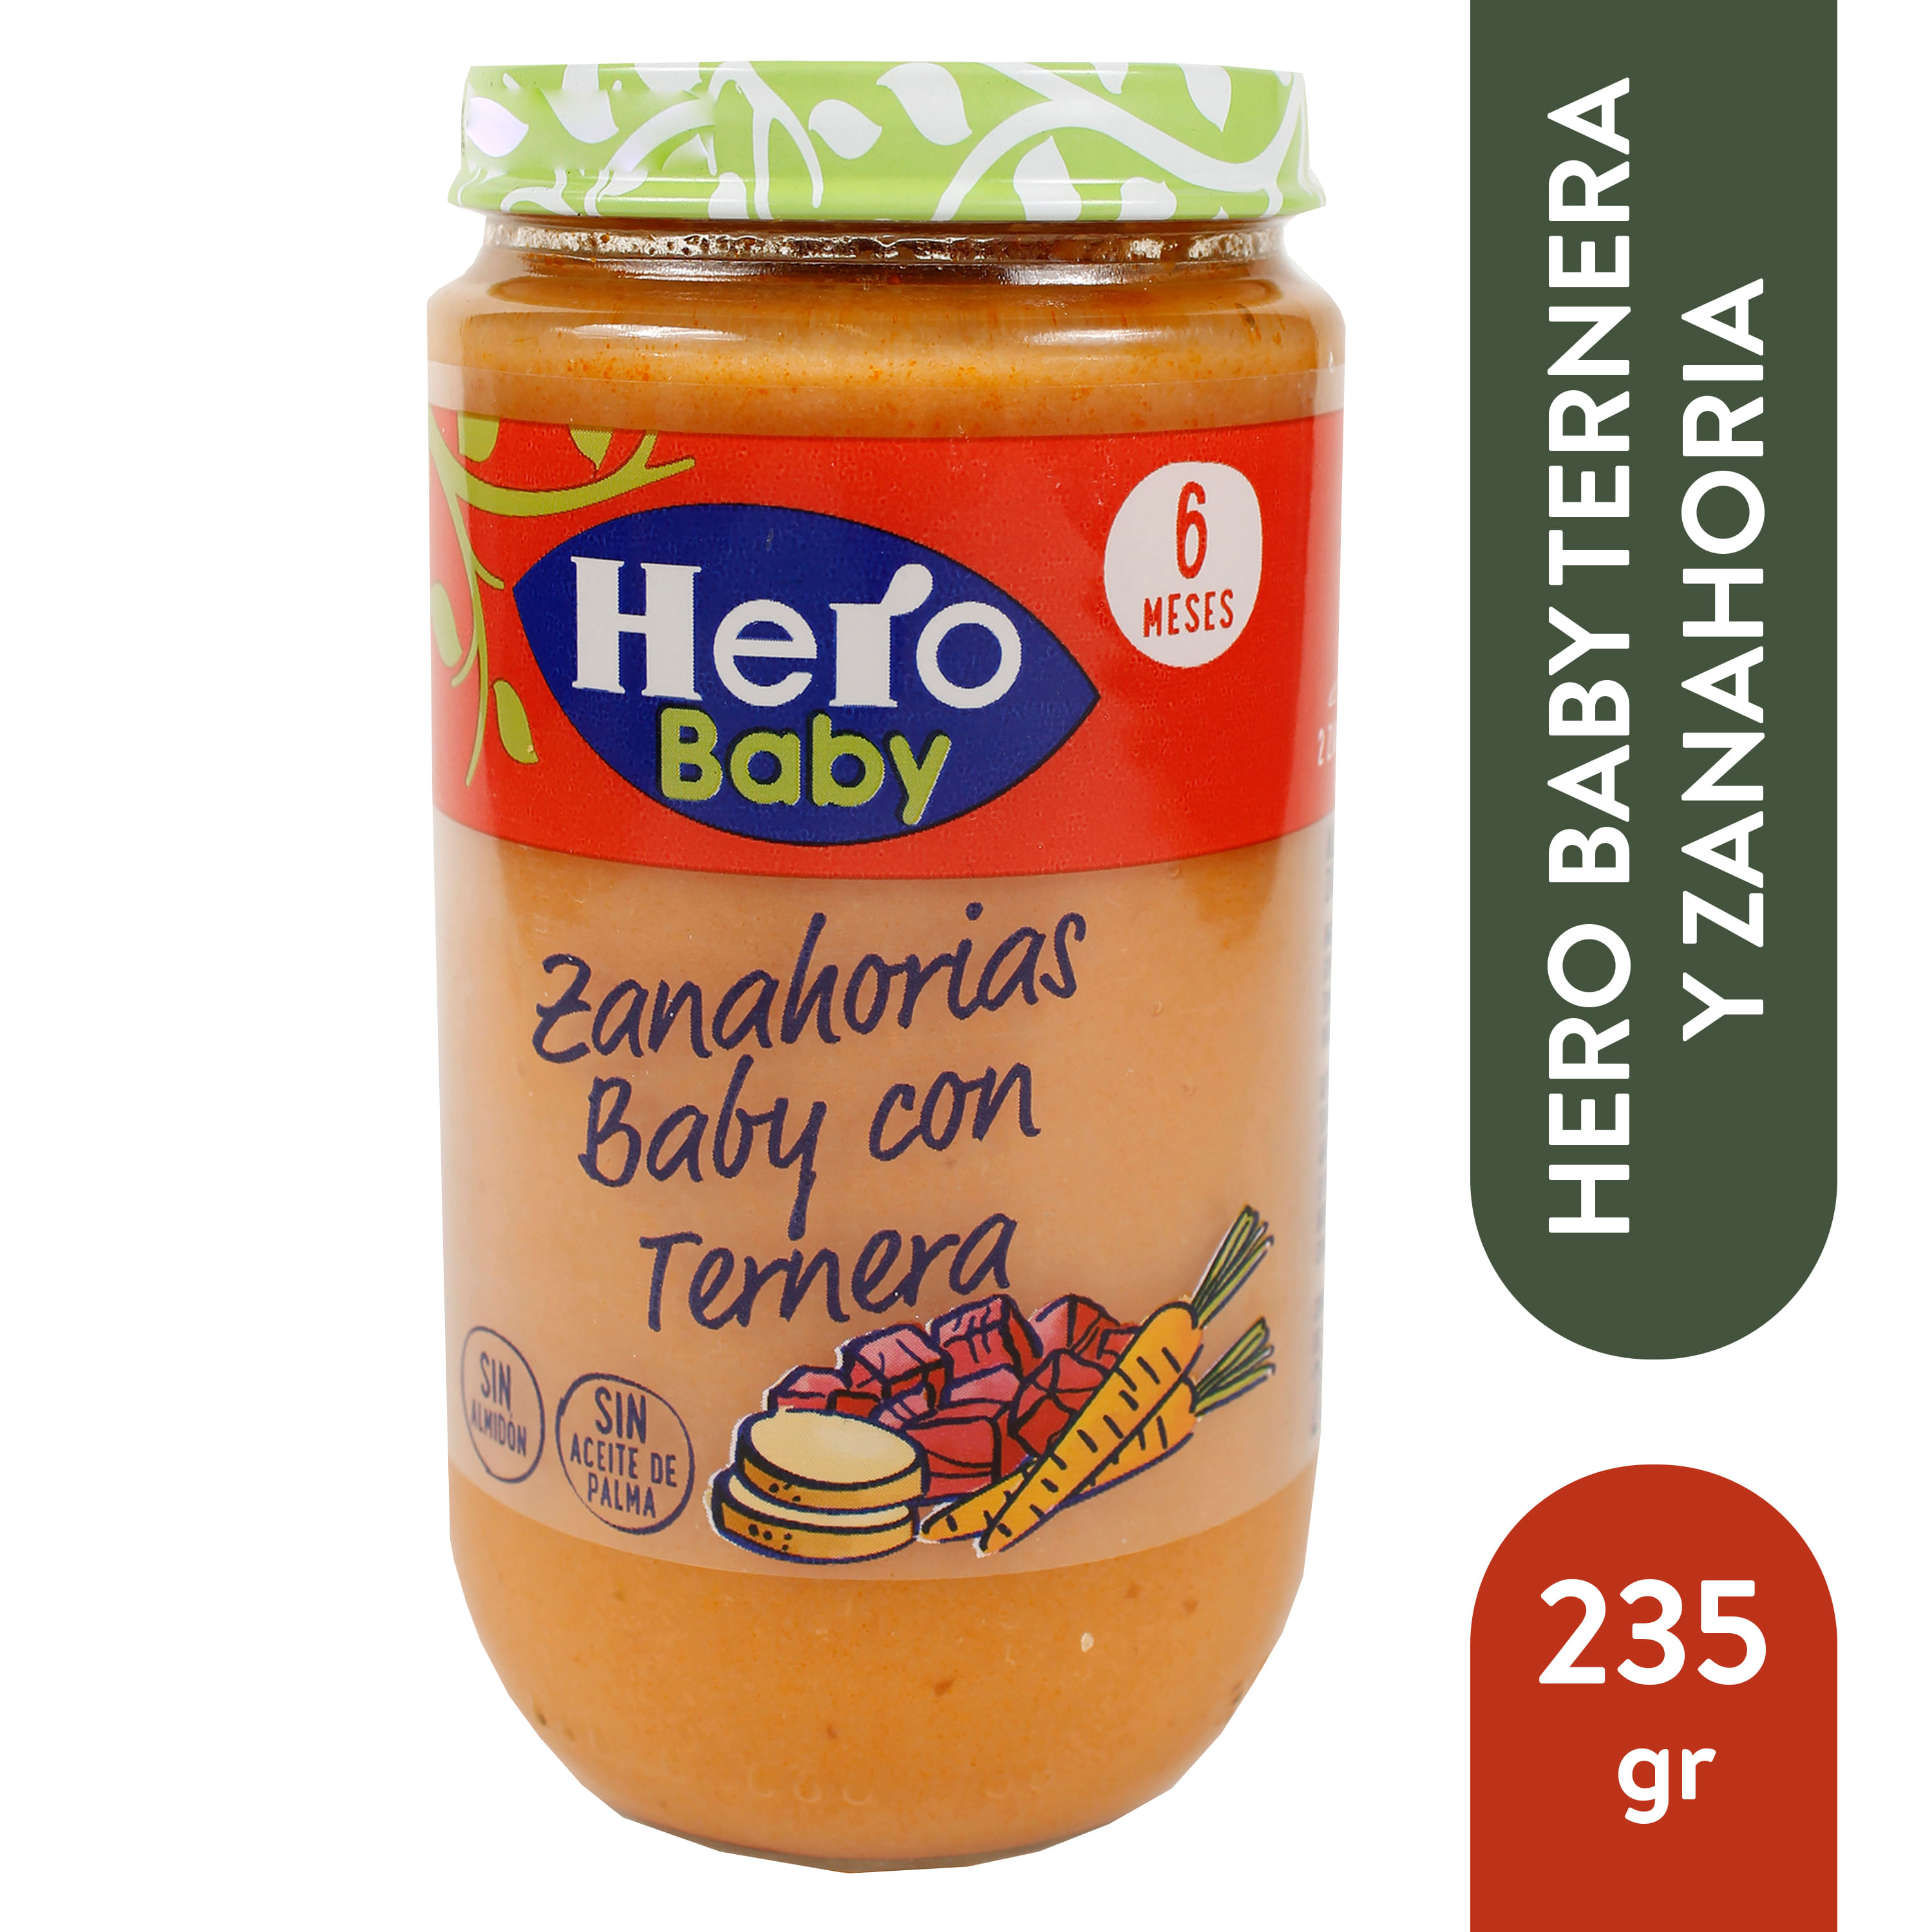 Hero Baby Potito Zanahoria con Arroz en Caldito - 235g 